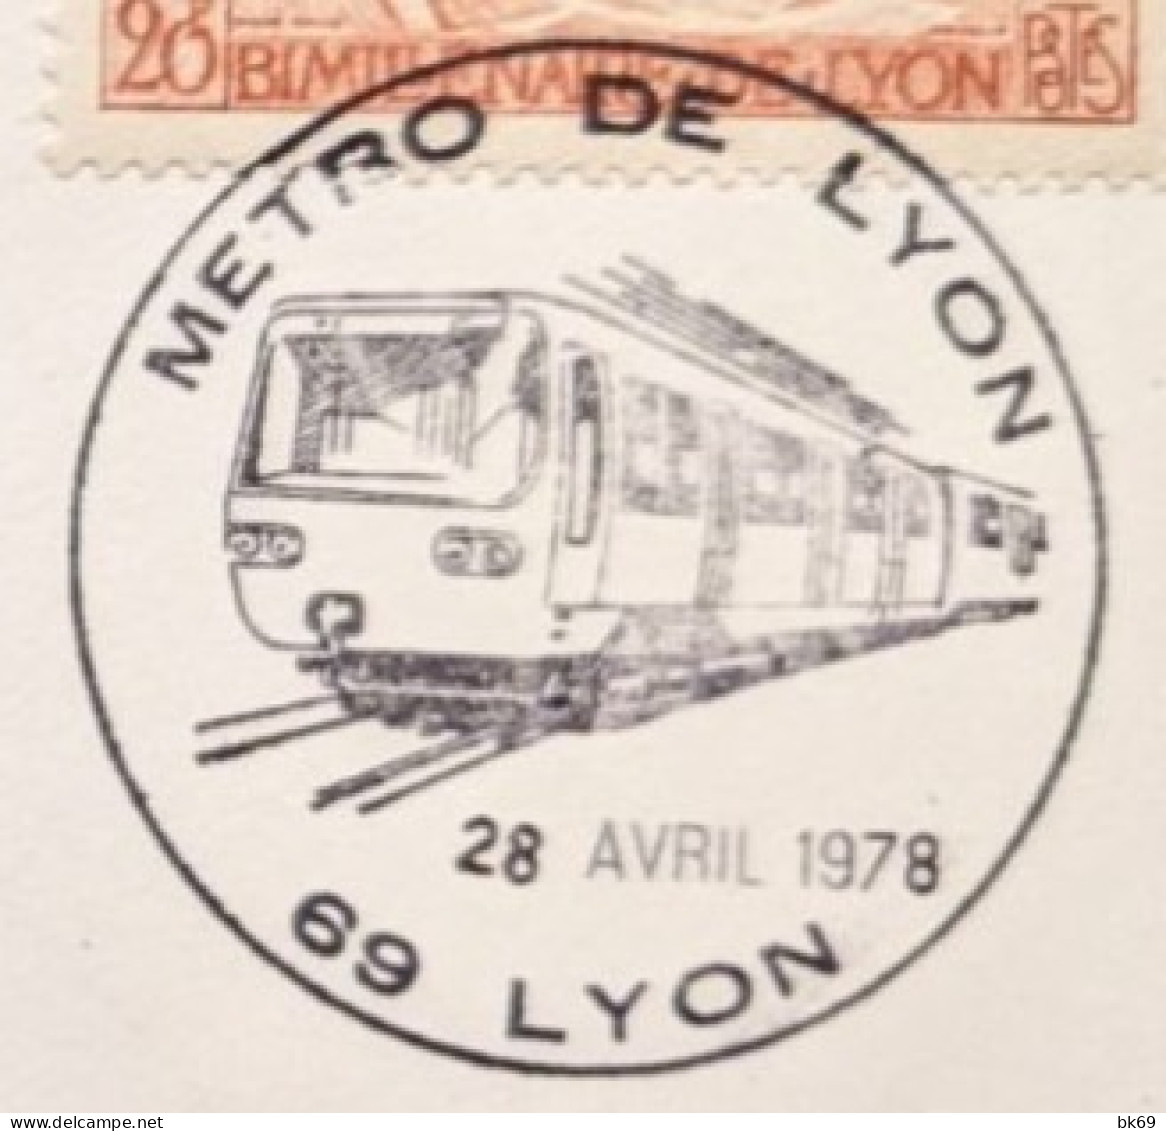 Métro Lyon 28 Avril 1978 Inauguration Du Métro De Lyon France - 1970-1979